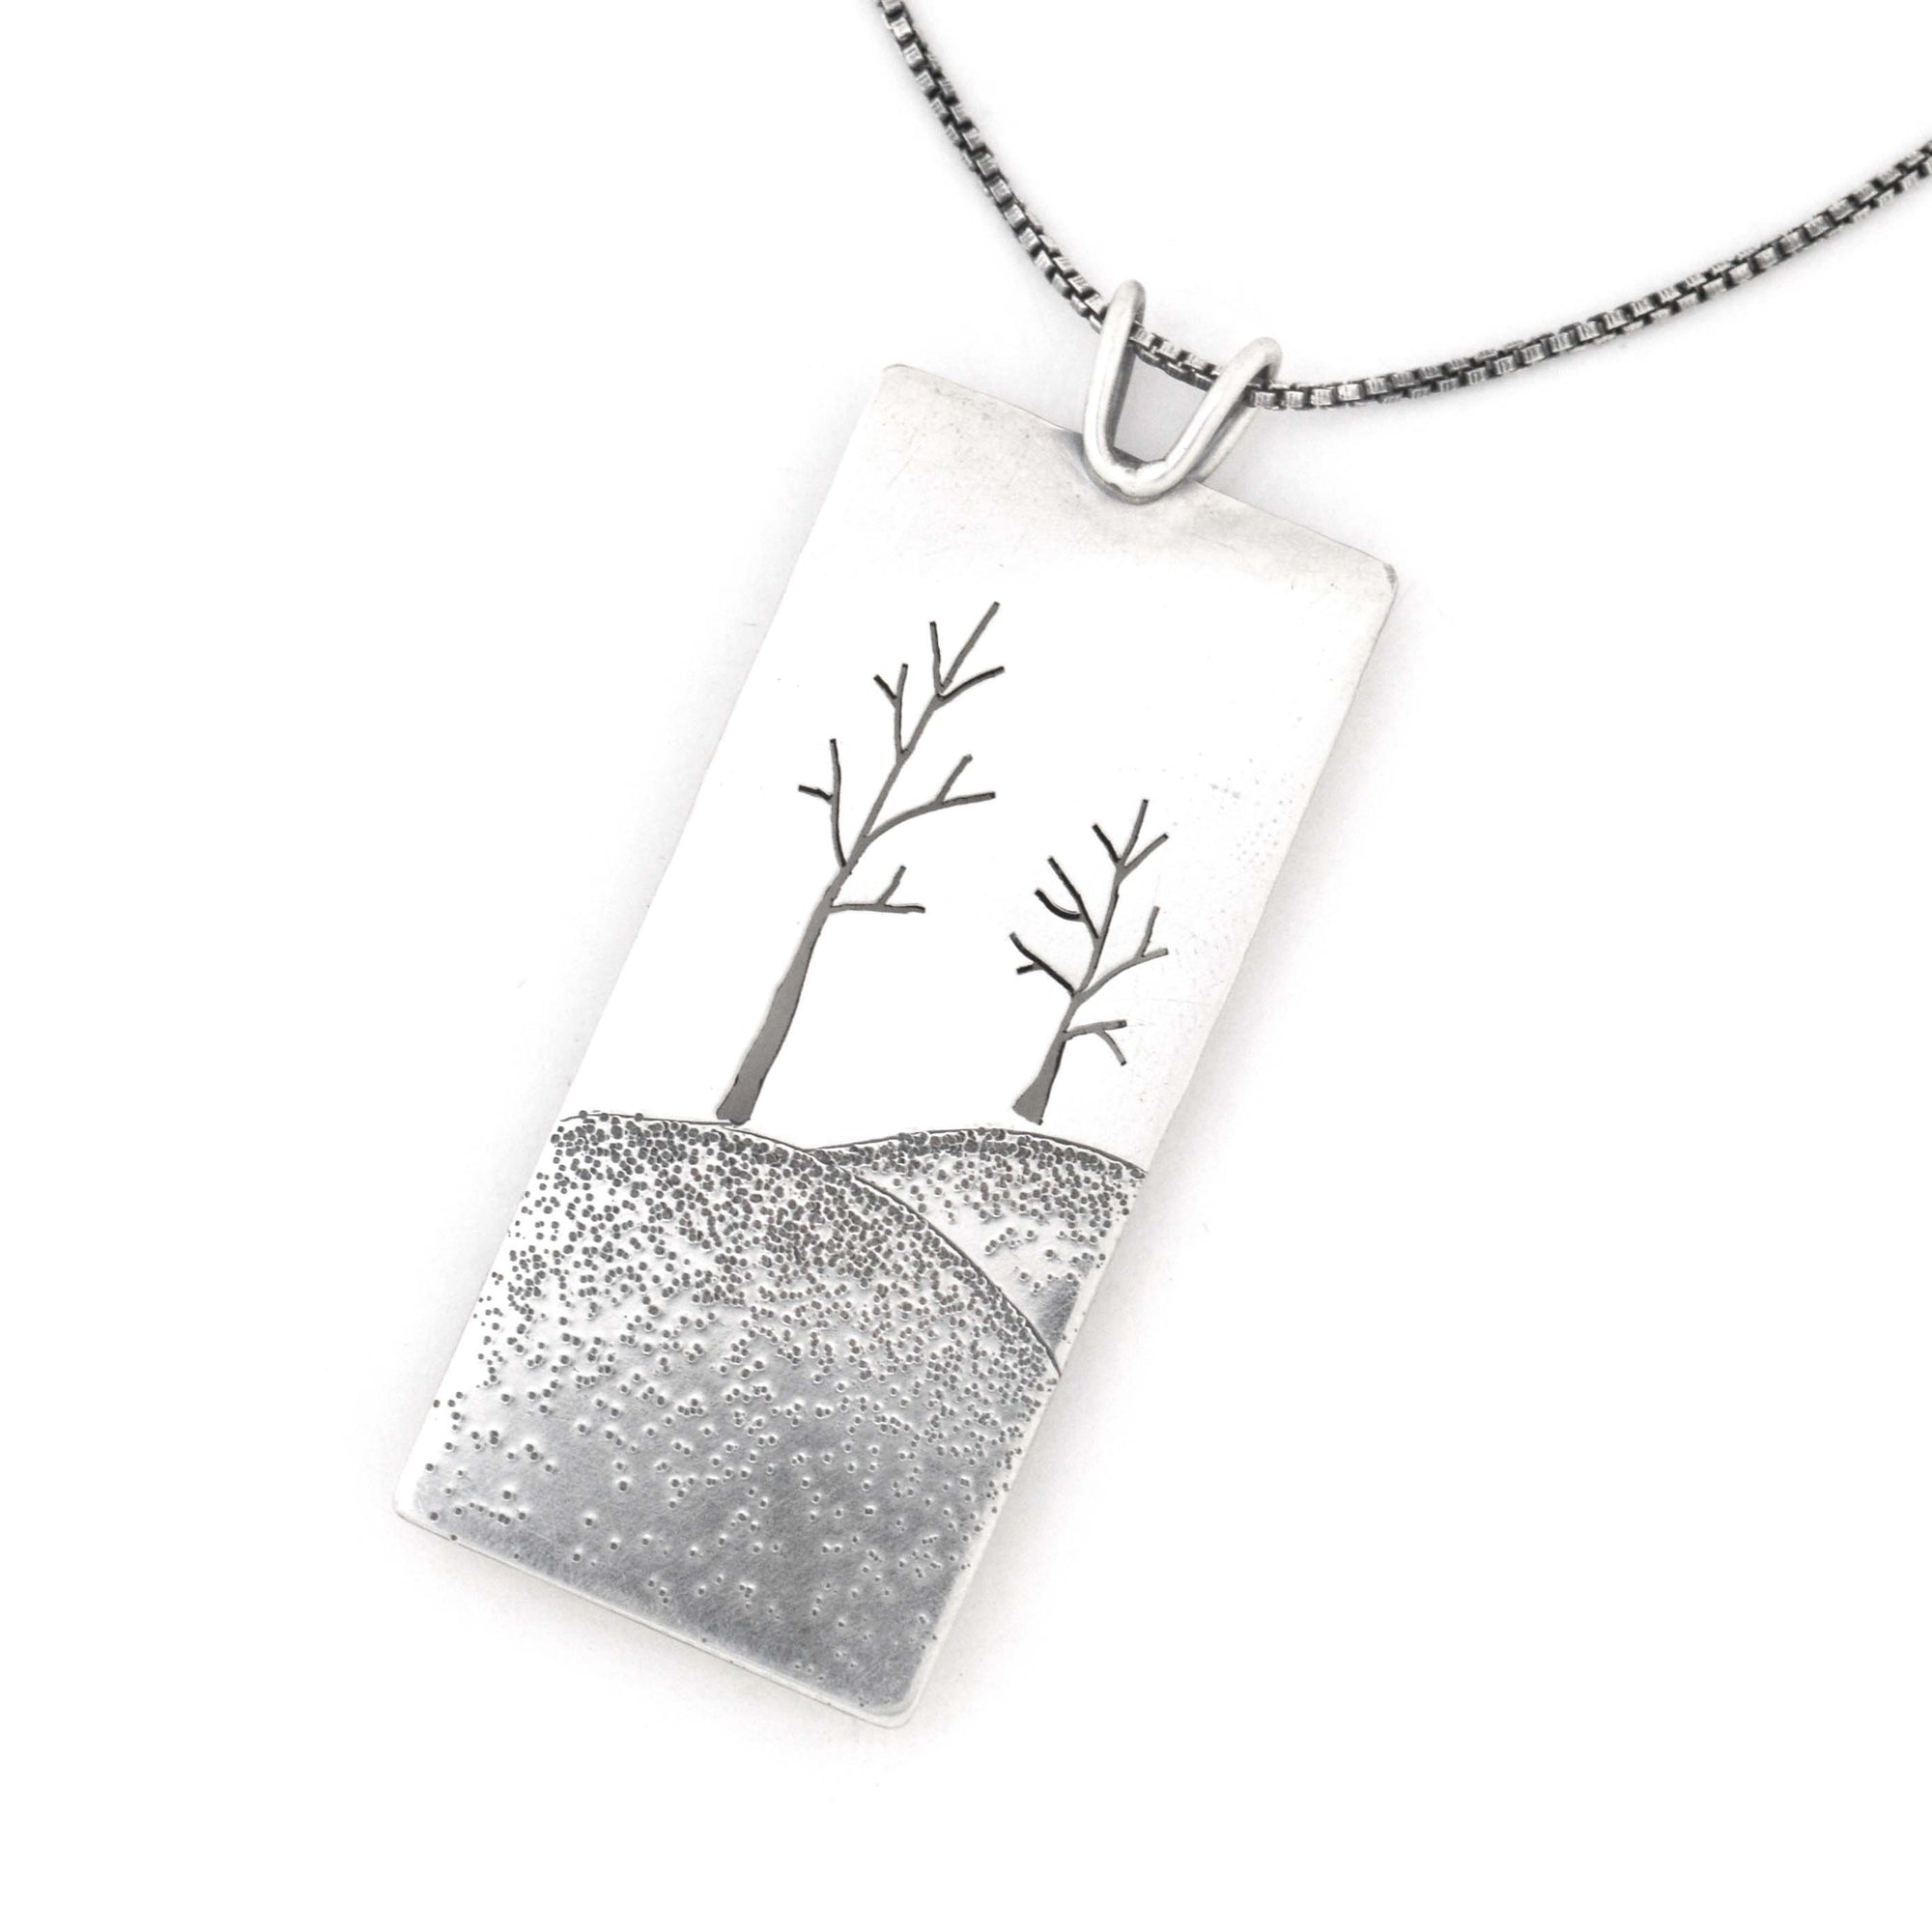 Summer Clouds Wonderland Pendant - Silver Pendant   3832 - handmade by Beth Millner Jewelry